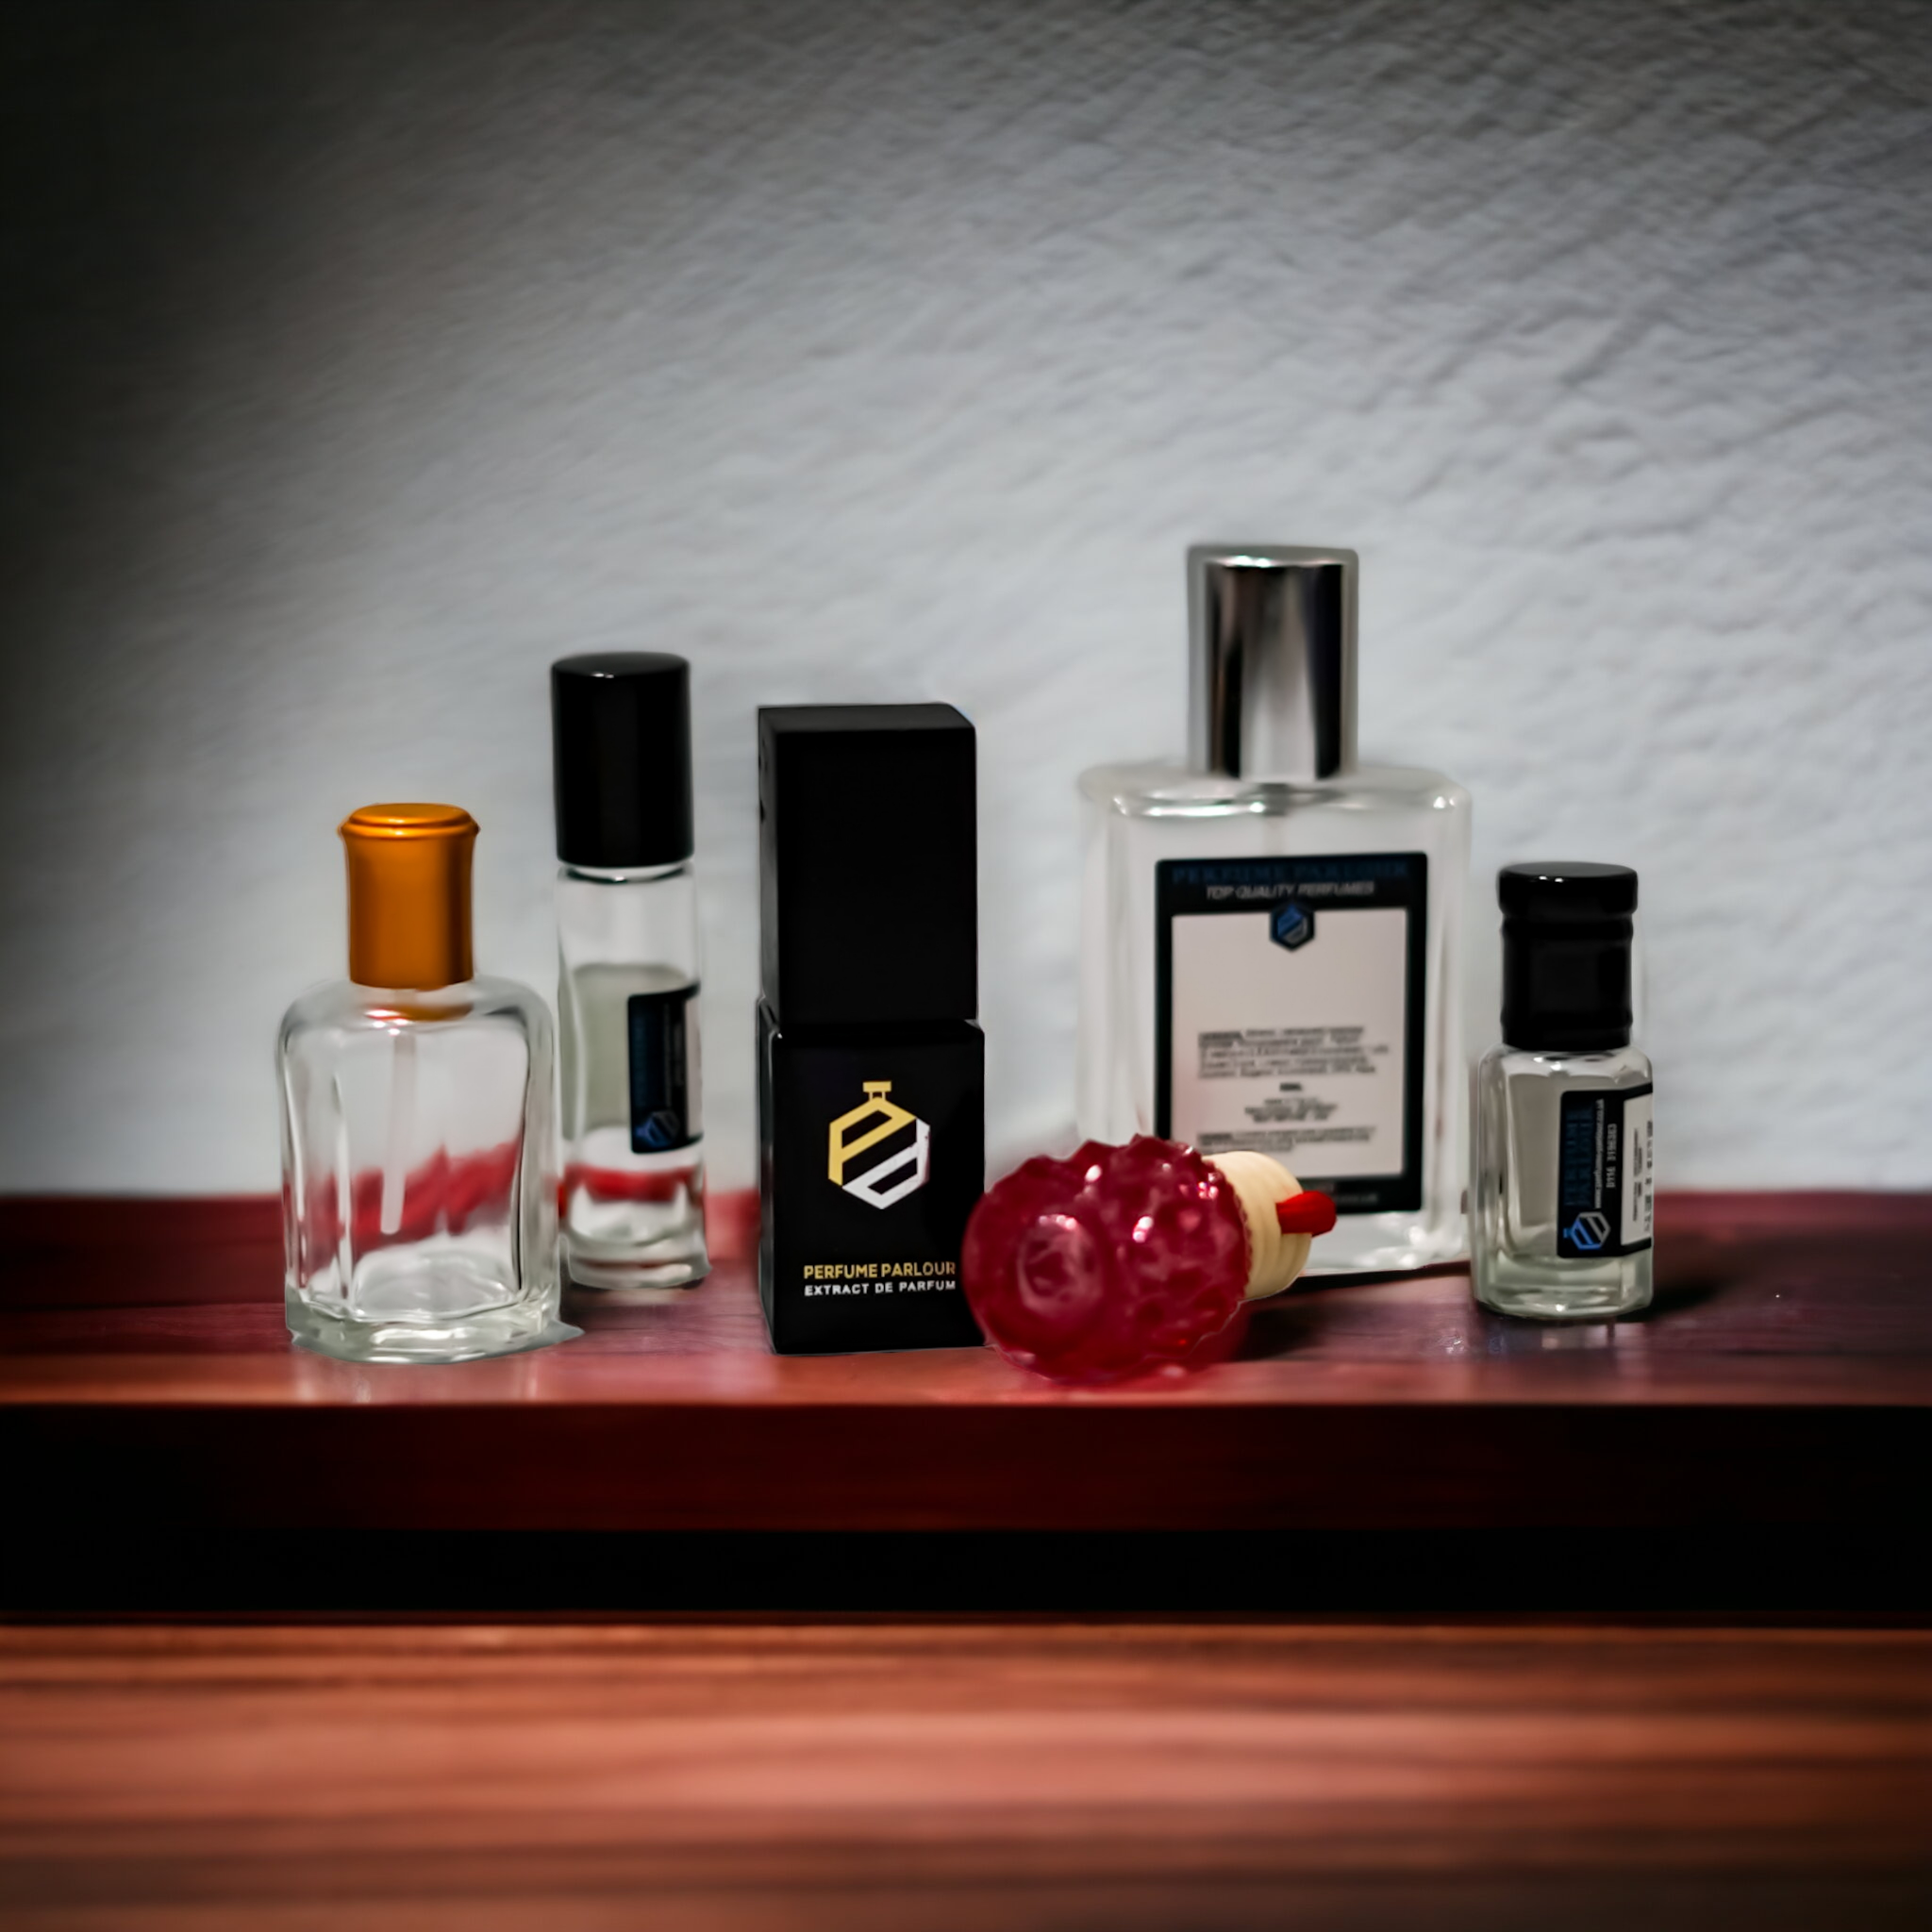 Oil Perfumery Impression of Louis Vuitton - Imagination